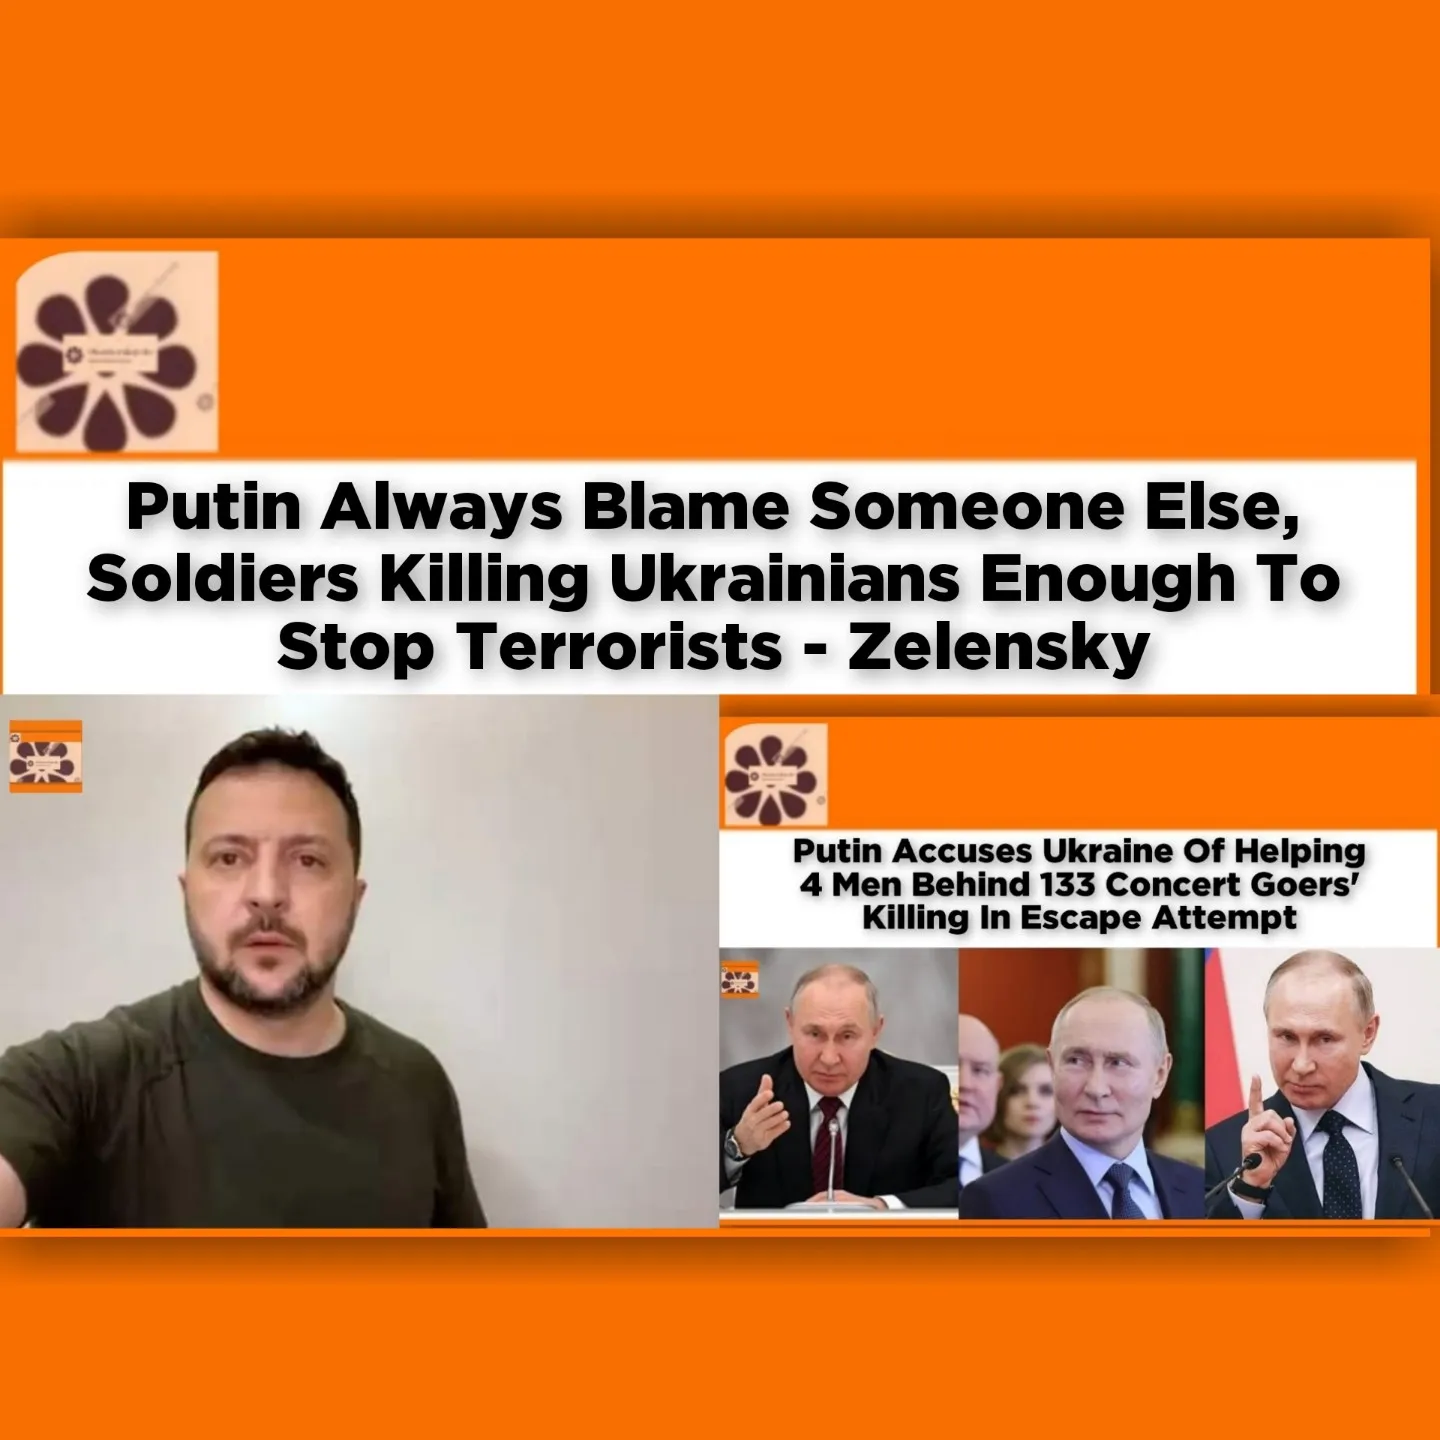 Putin Always Blame Someone Else, Soldiers Killing Ukrainians Enough To Stop Terrorists - Zelensky ~ OsazuwaAkonedo #Concert #ISK #Khorasan #Moscow #Putin #Russia #Ukraine #Vladimir #Volodymyr #Zelensky